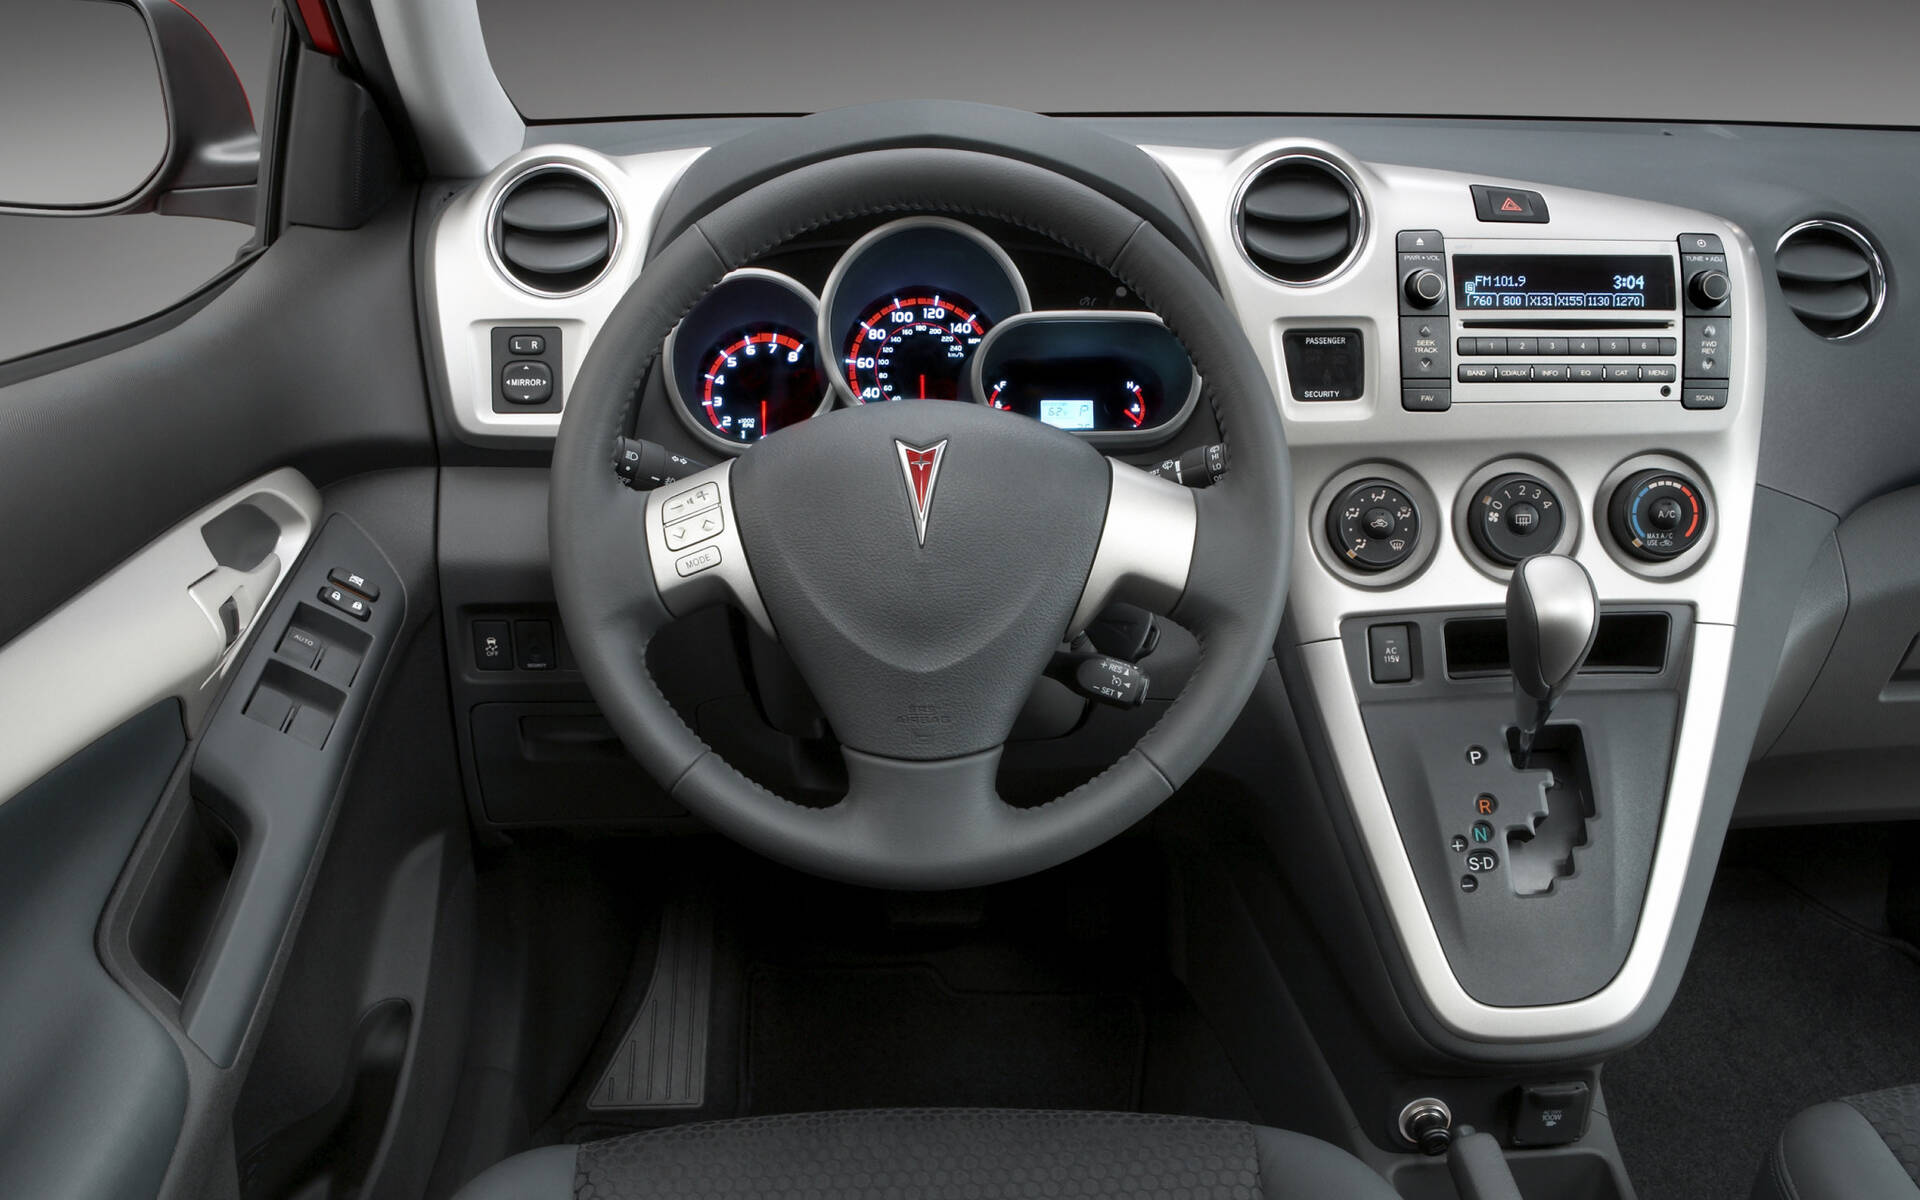 Pontiac Vibe and Toyota Matrix: Are They the Same Car? | Otogo